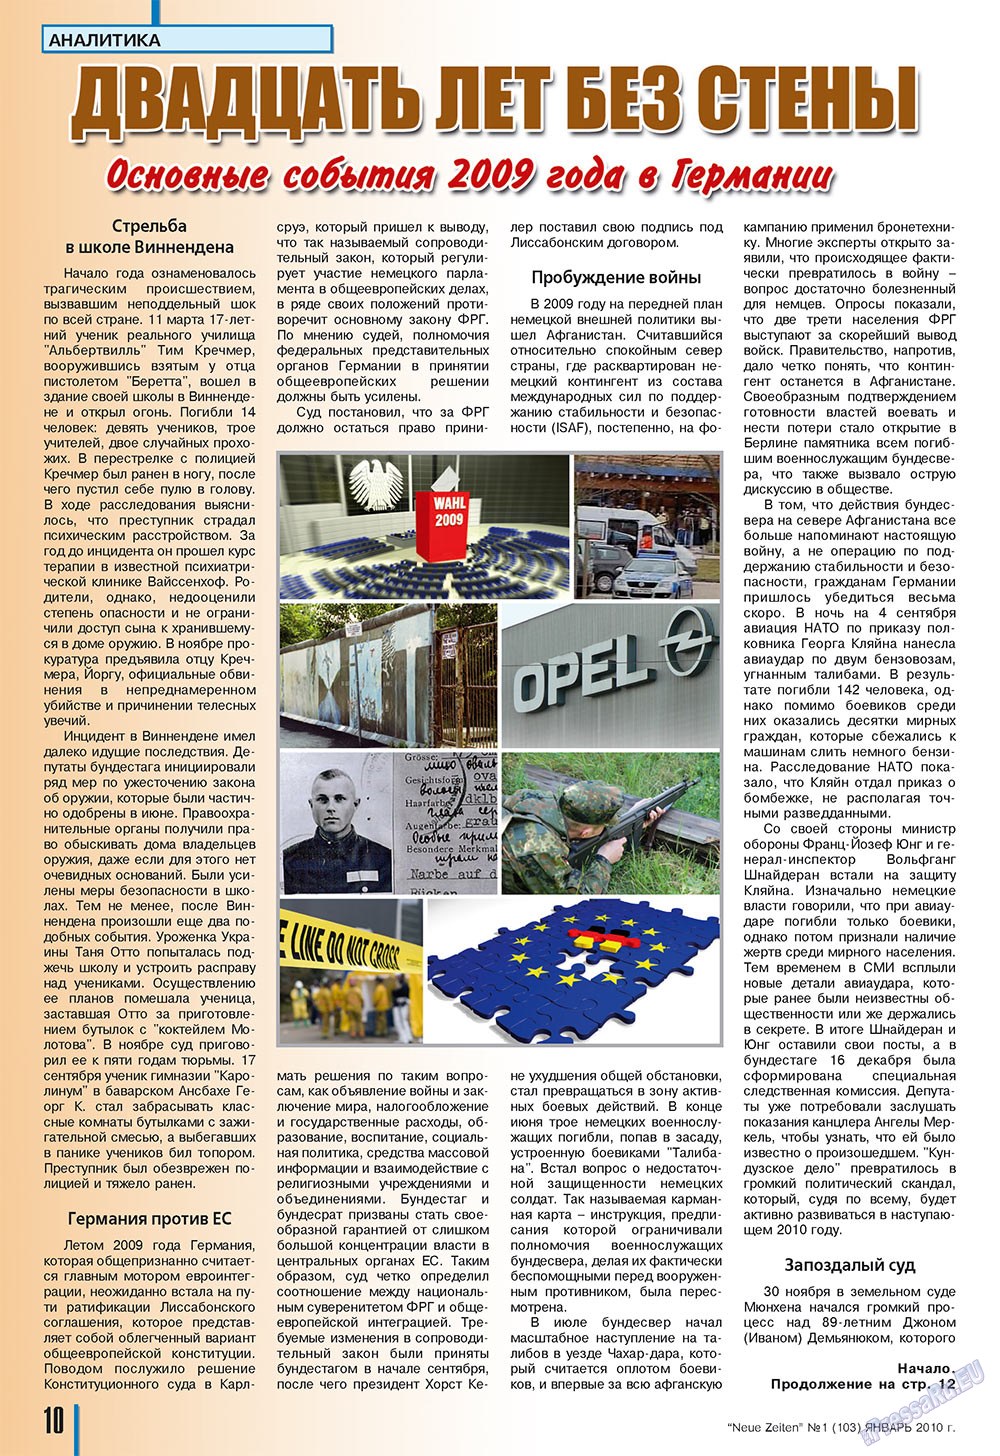 Neue Zeiten (журнал). 2010 год, номер 1, стр. 10